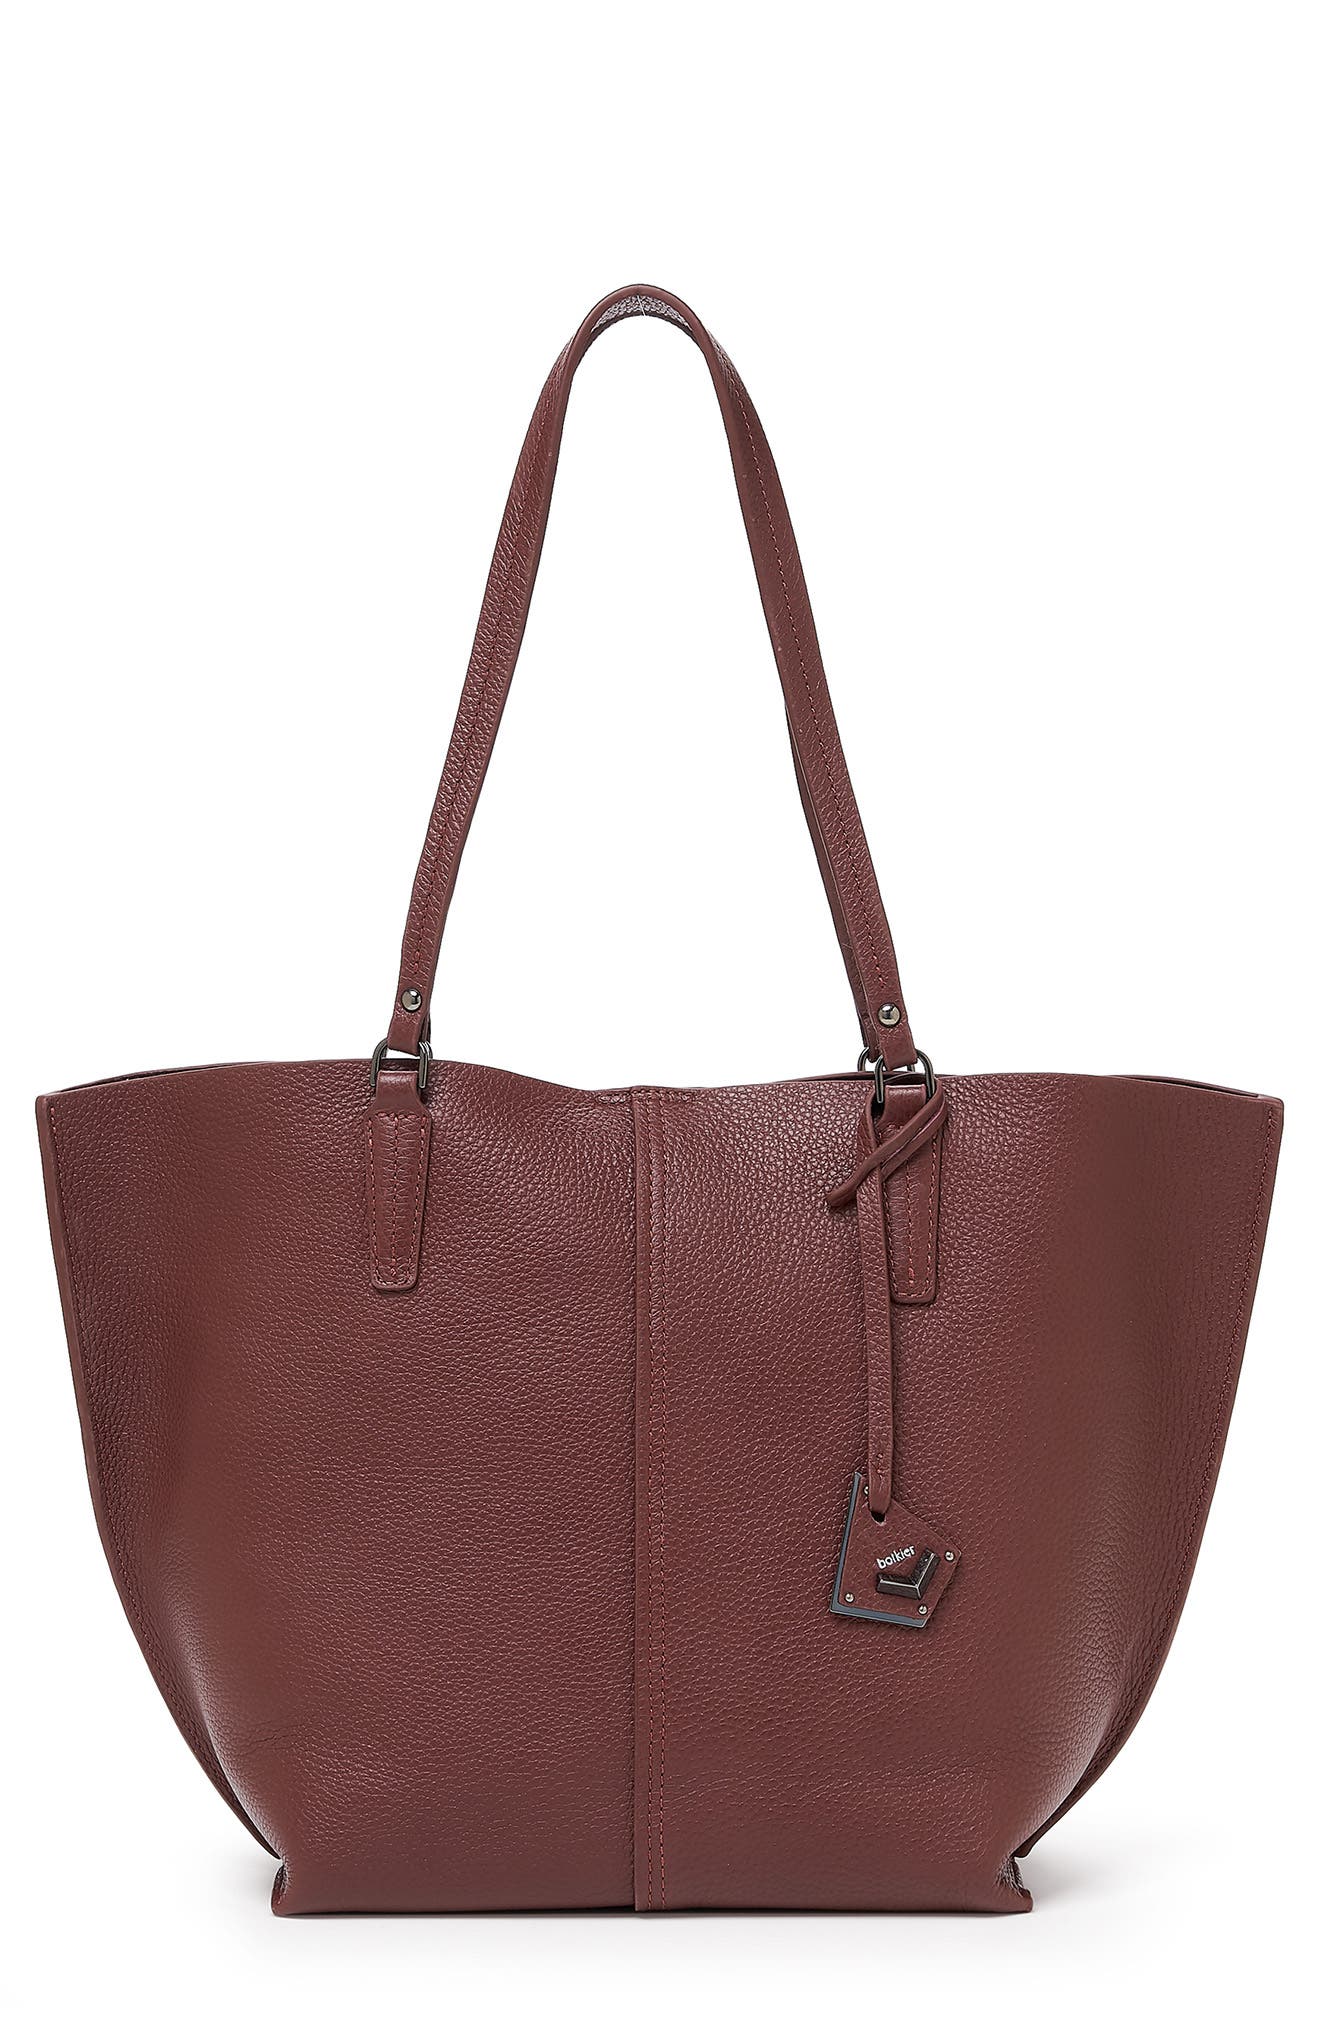 BURGUNDY TOTE BAG LeahWard Womens Designer Tote Bags Large Faux Leather Handbags Shoulder Bag For Her School 536